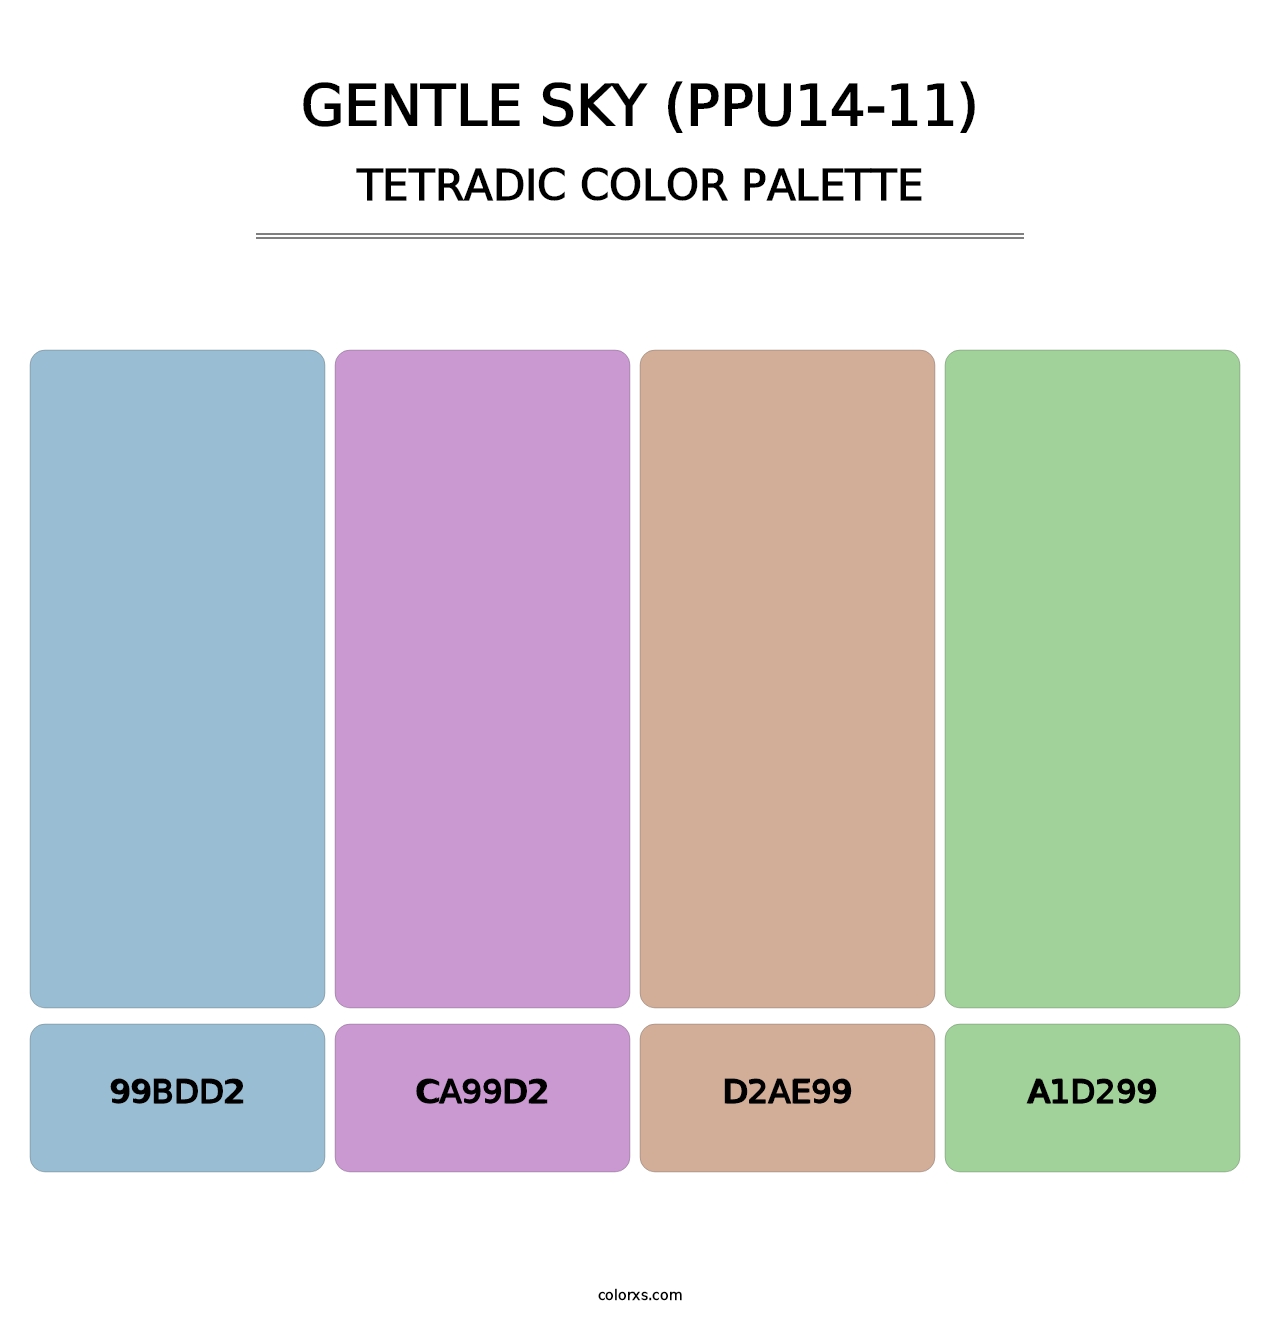 Gentle Sky (PPU14-11) - Tetradic Color Palette